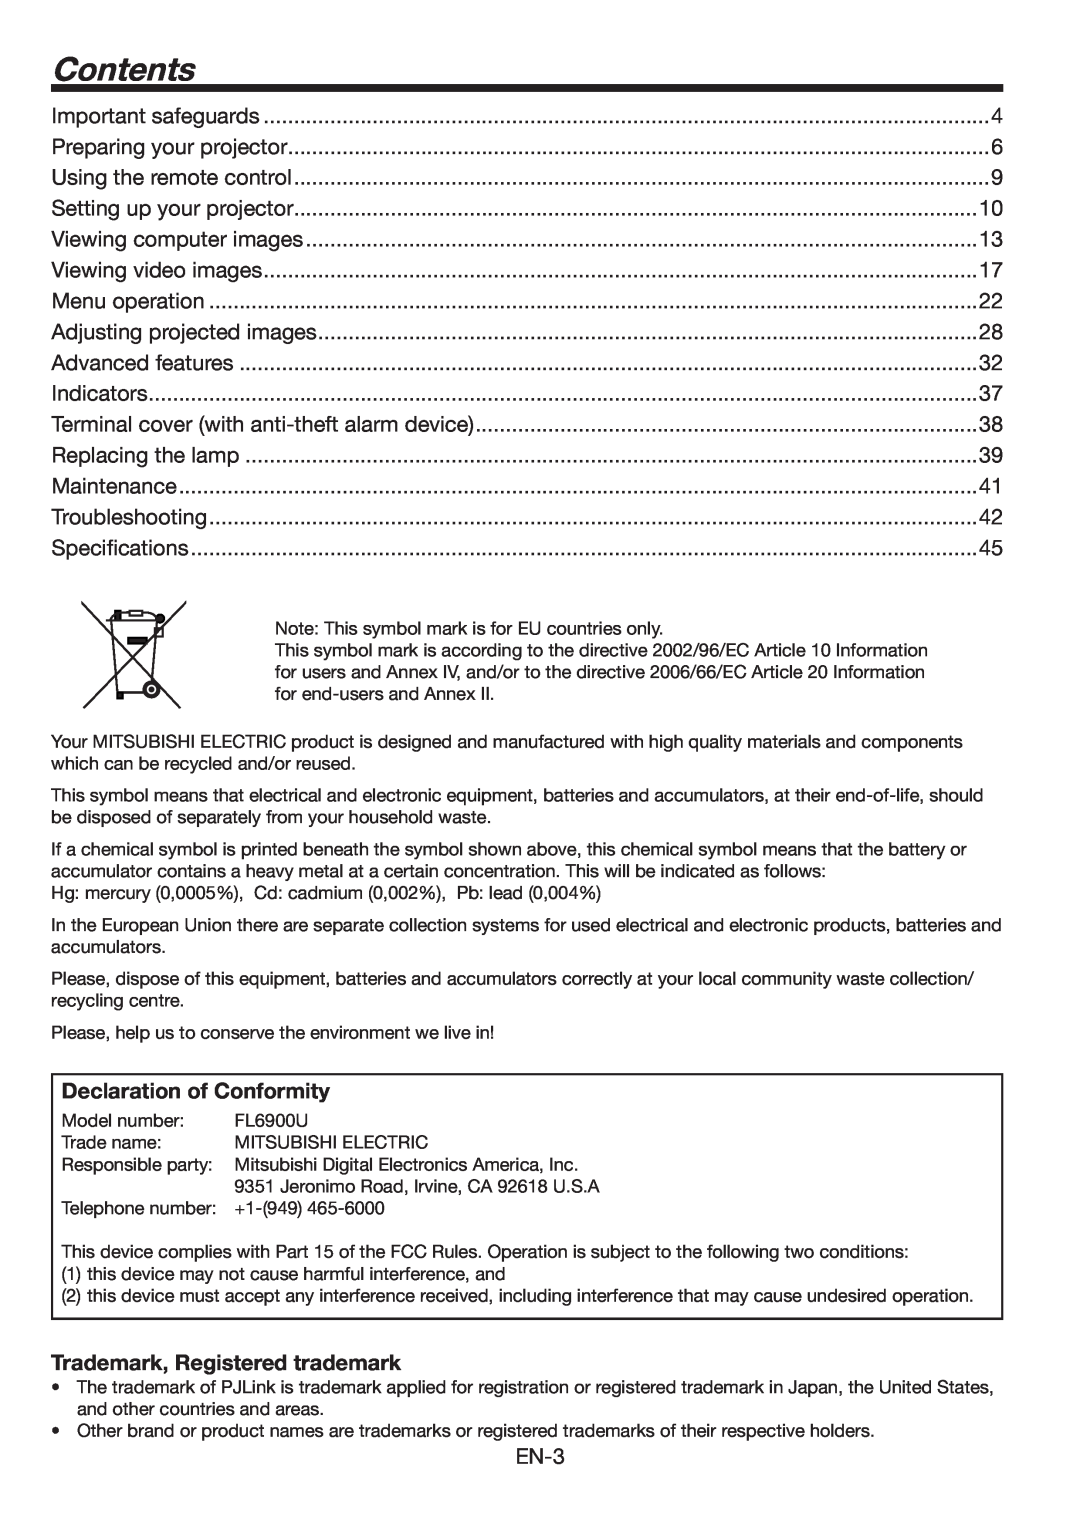 Mitsubishi Electronics FL6900U user manual Contents, Declaration of Conformity, Trademark, Registered trademark 